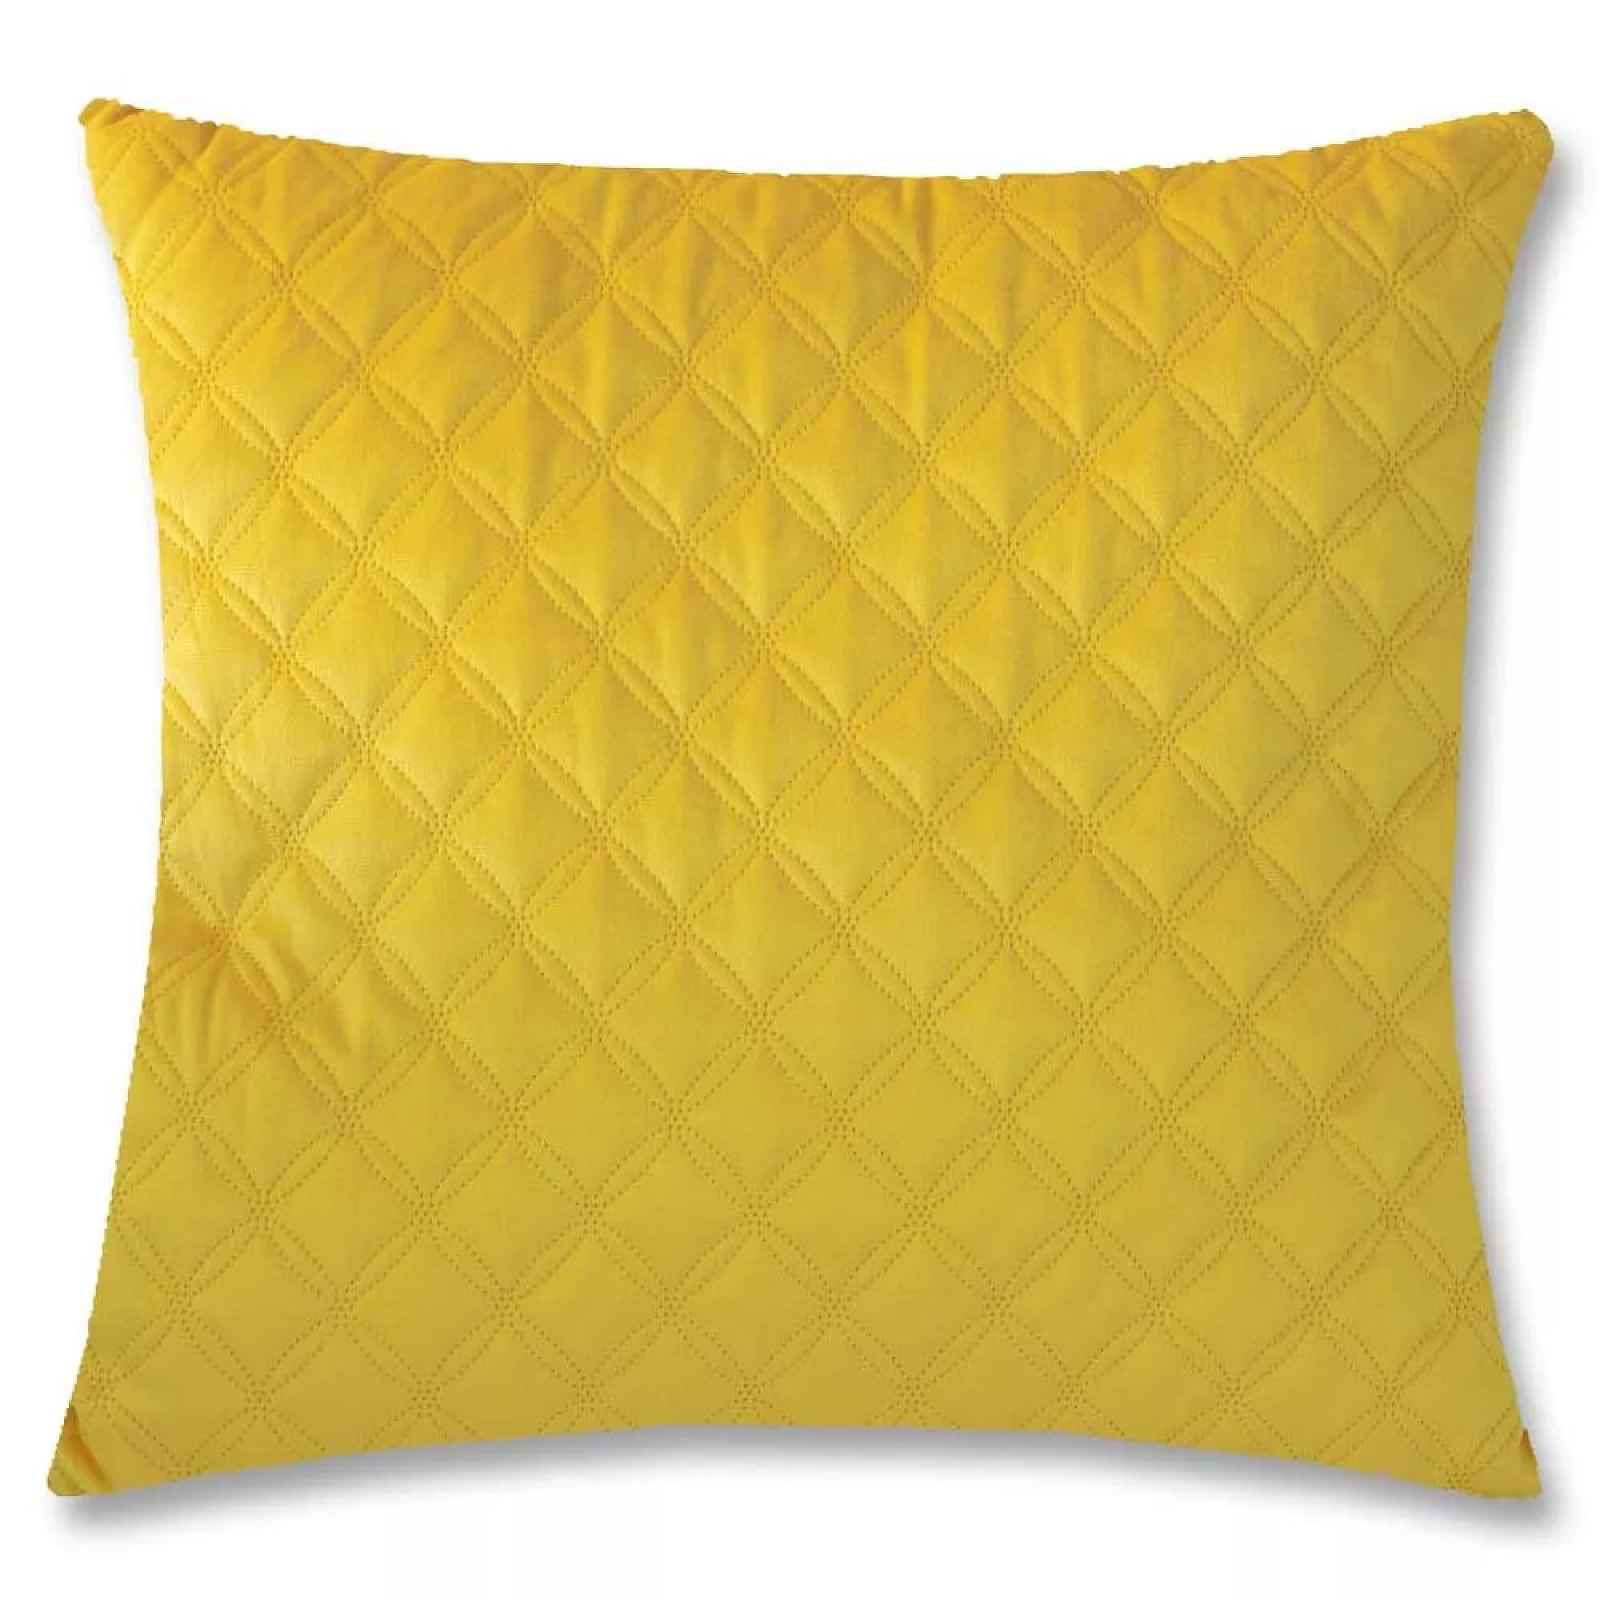 Dekorační polštář Christene 45x45 cm, žlutý s kosočtverci